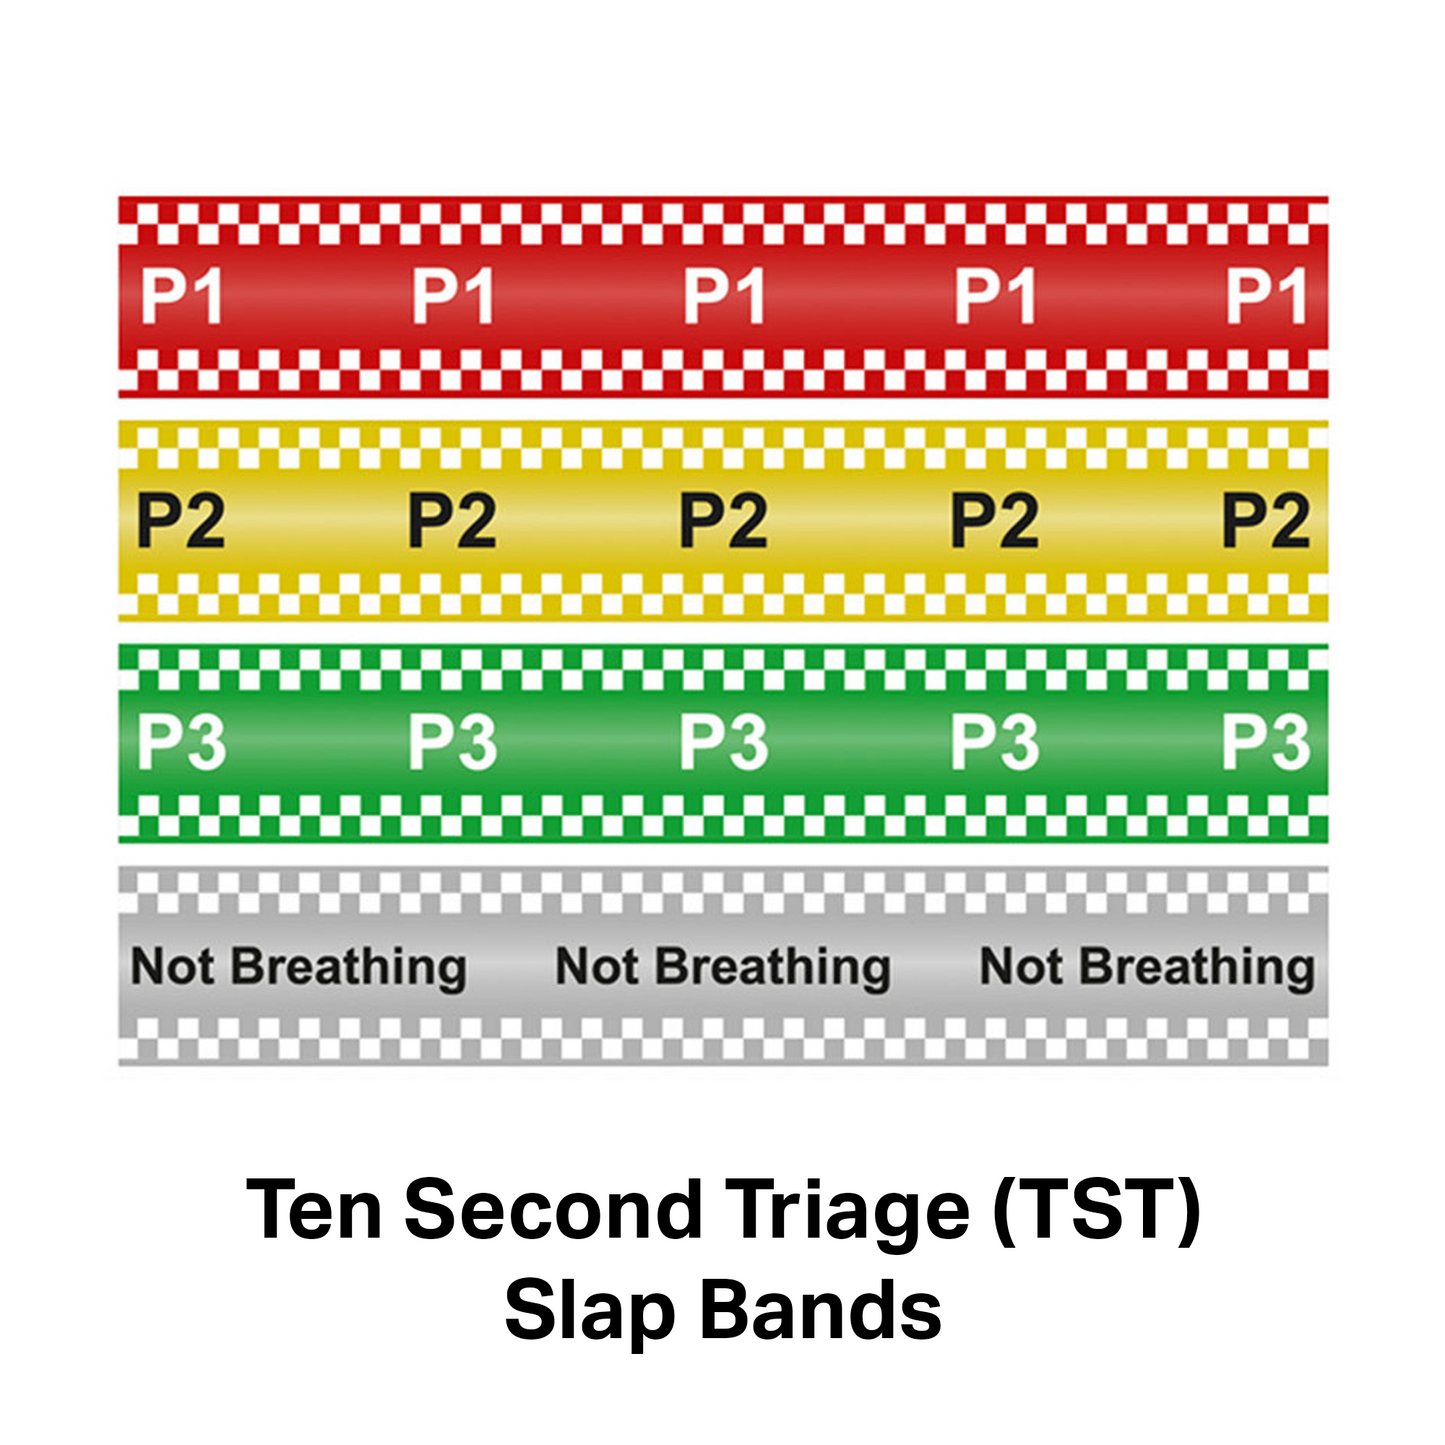 NHS Ten Second Triage (TST) Slap Band - P2 Yellow